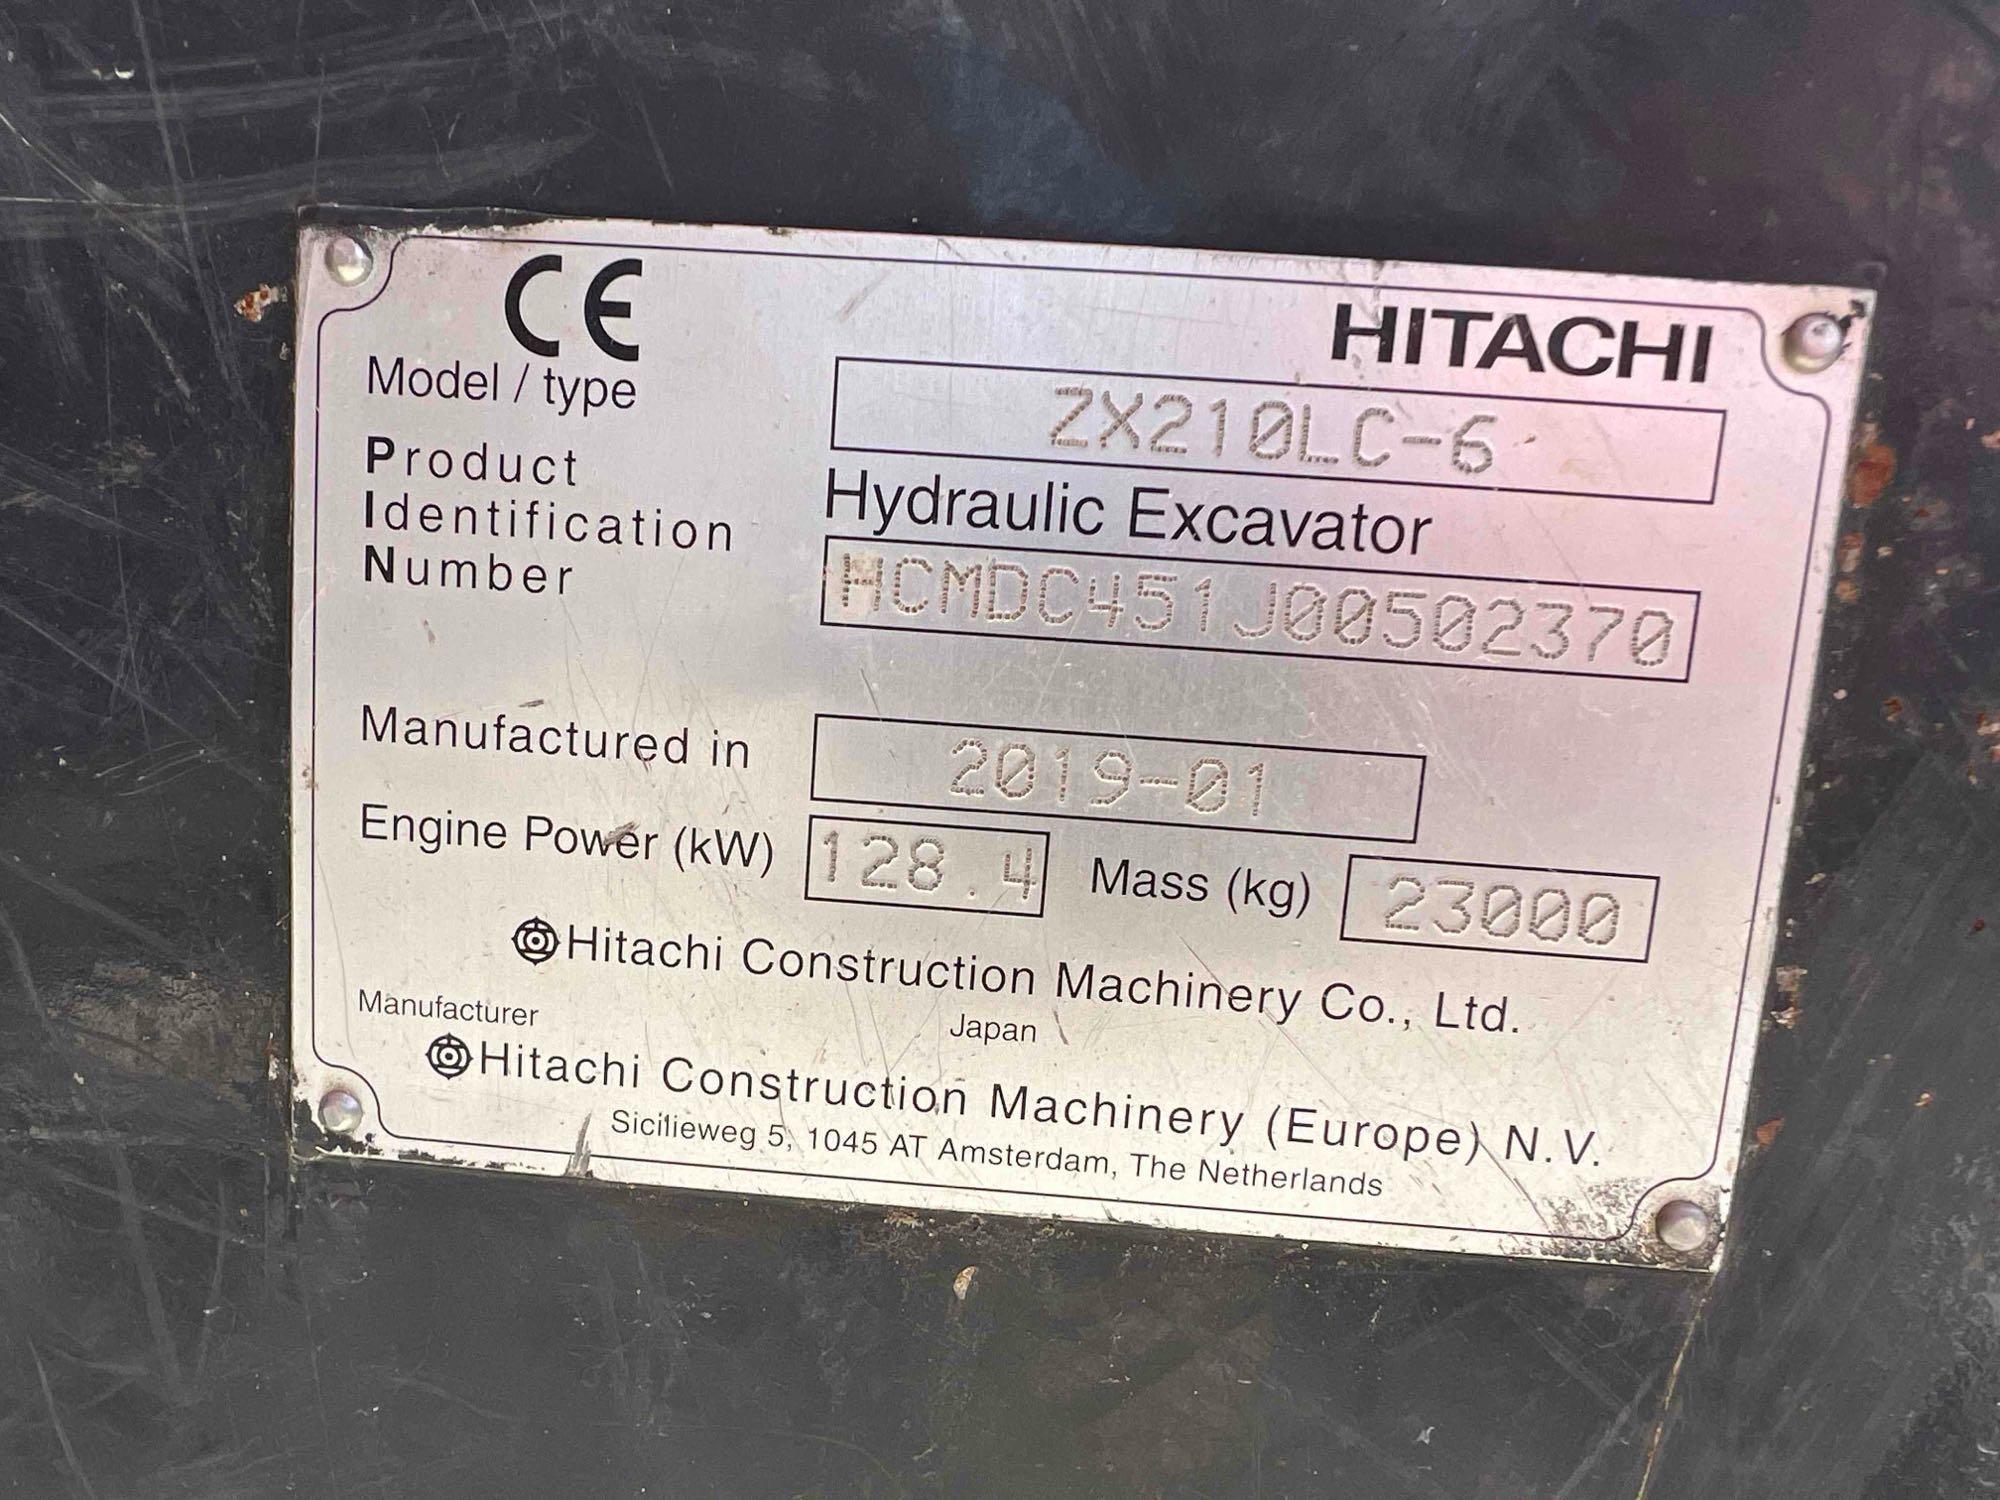 2019 HITACHI ZX210LC-6 HYDRAULIC EXCAVATOR SN-502370 powered by Isuzu diesel engine, equipped with